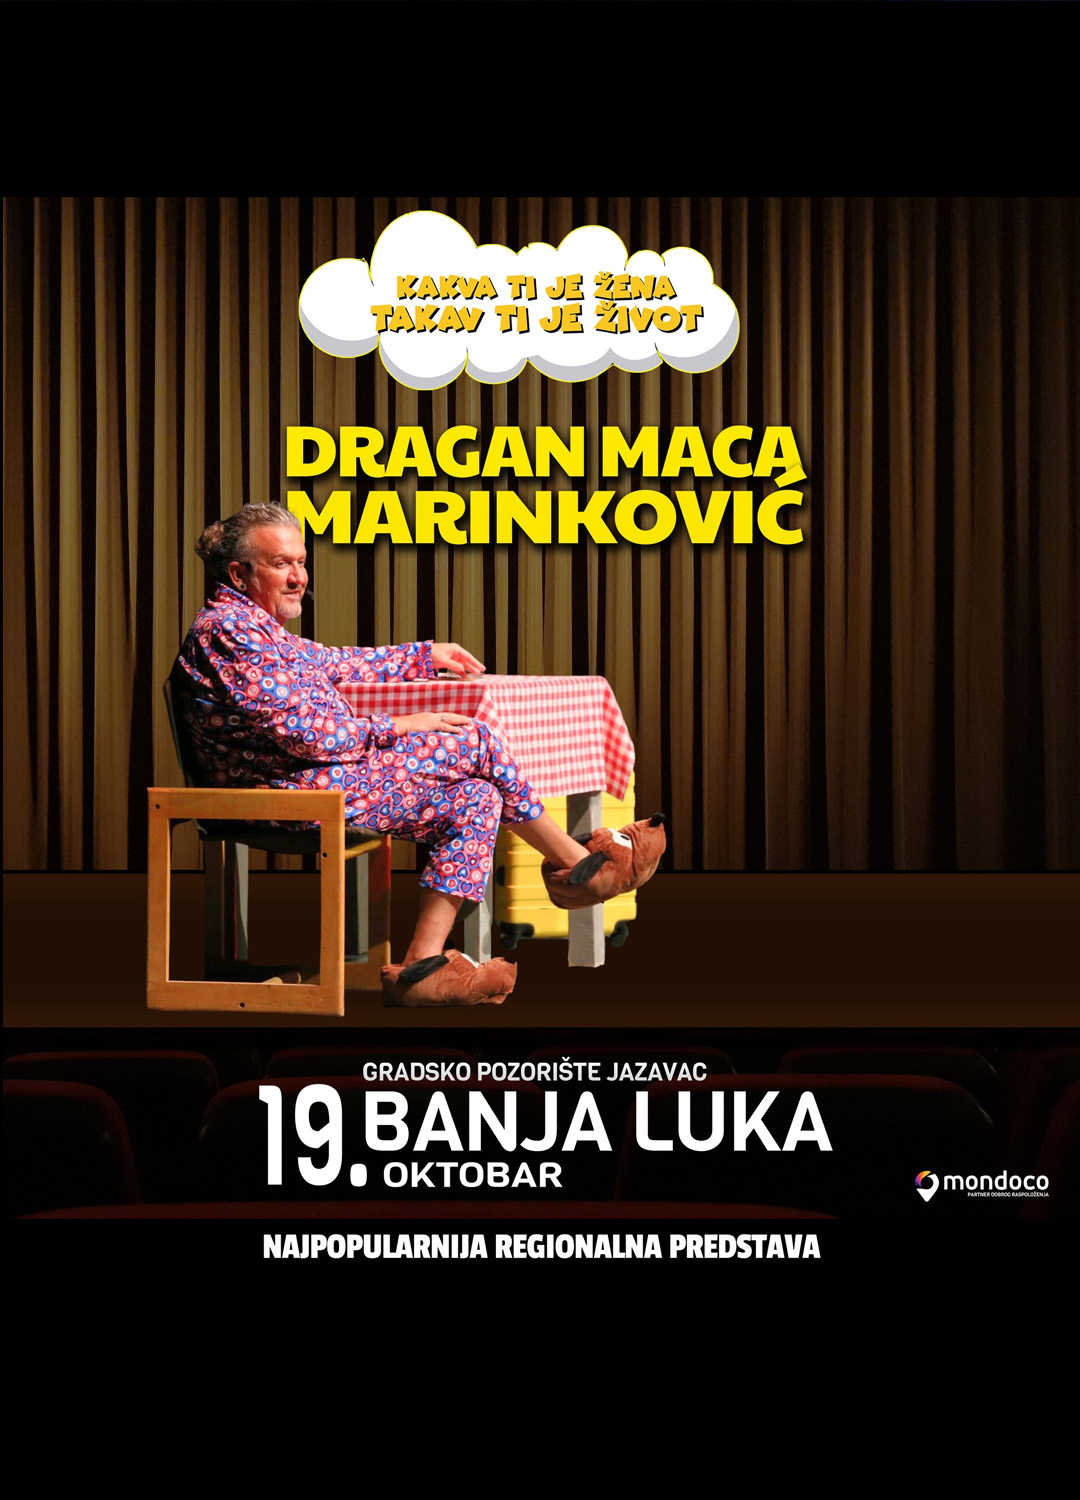 Dragan Marnikovic Maca Banja Luka